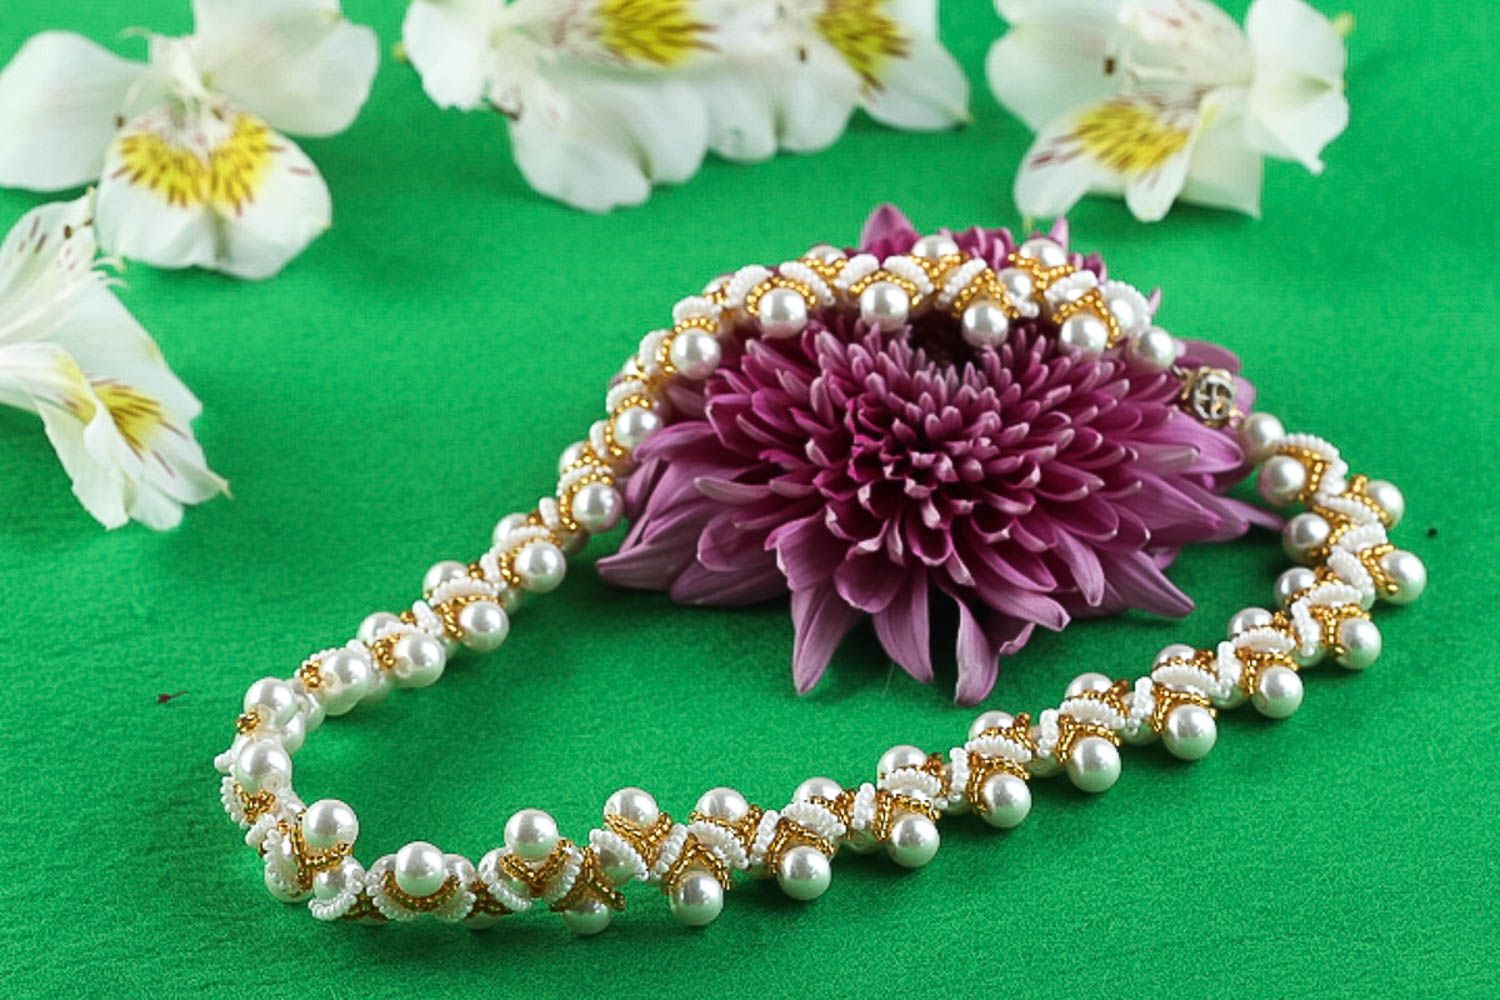 Beautiful handmade beaded necklace artisan jewelry designs bead weaving ideas photo 1